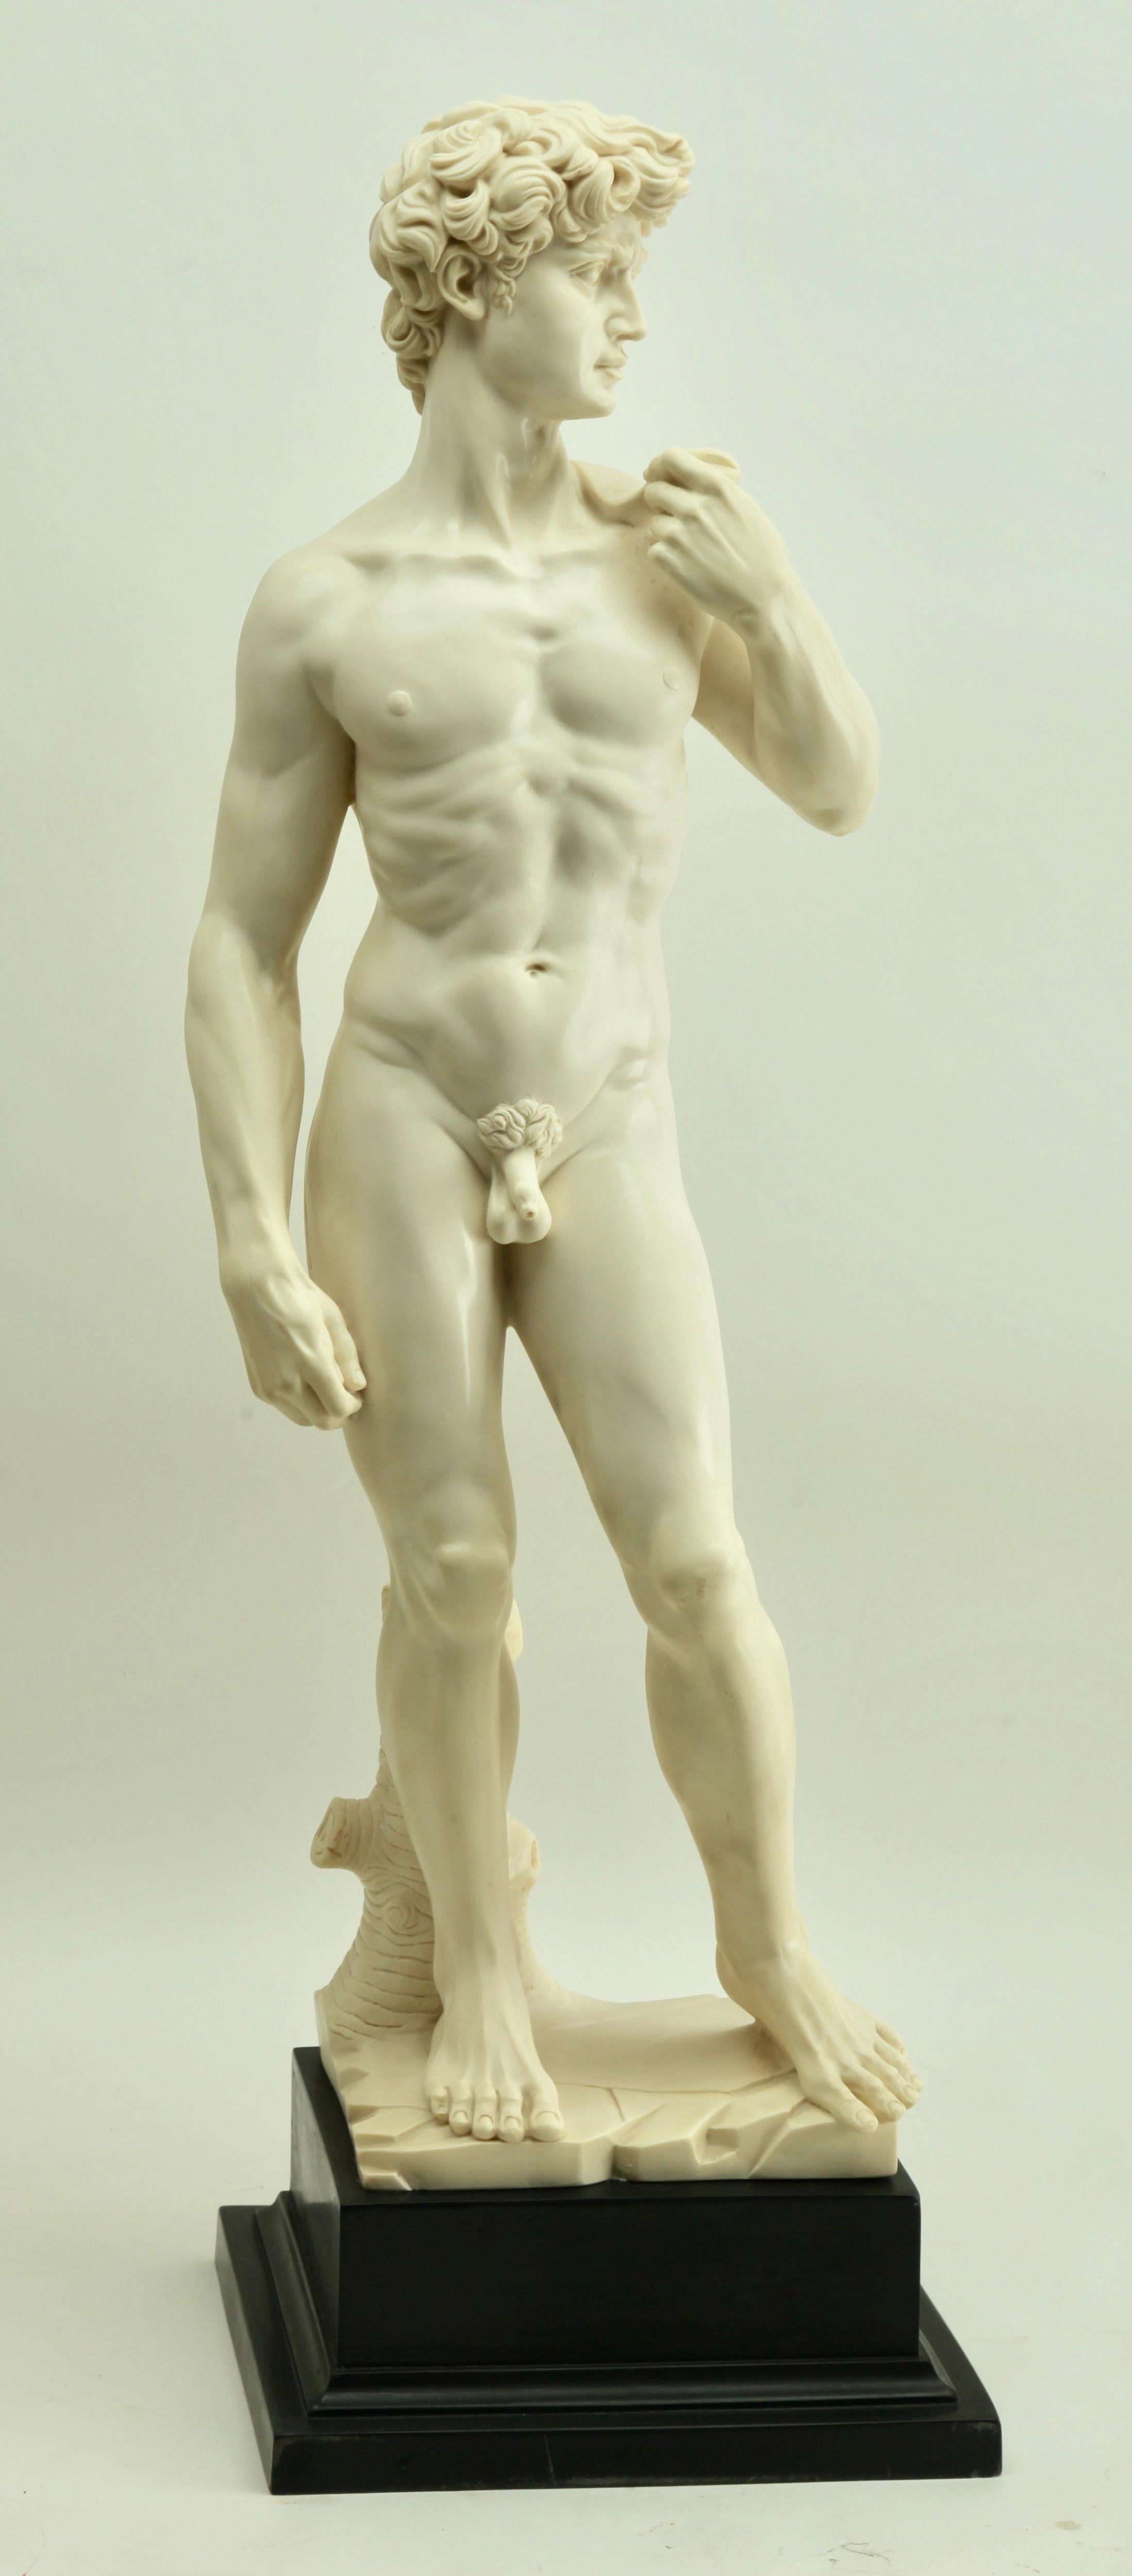 g ruggeri statue of david